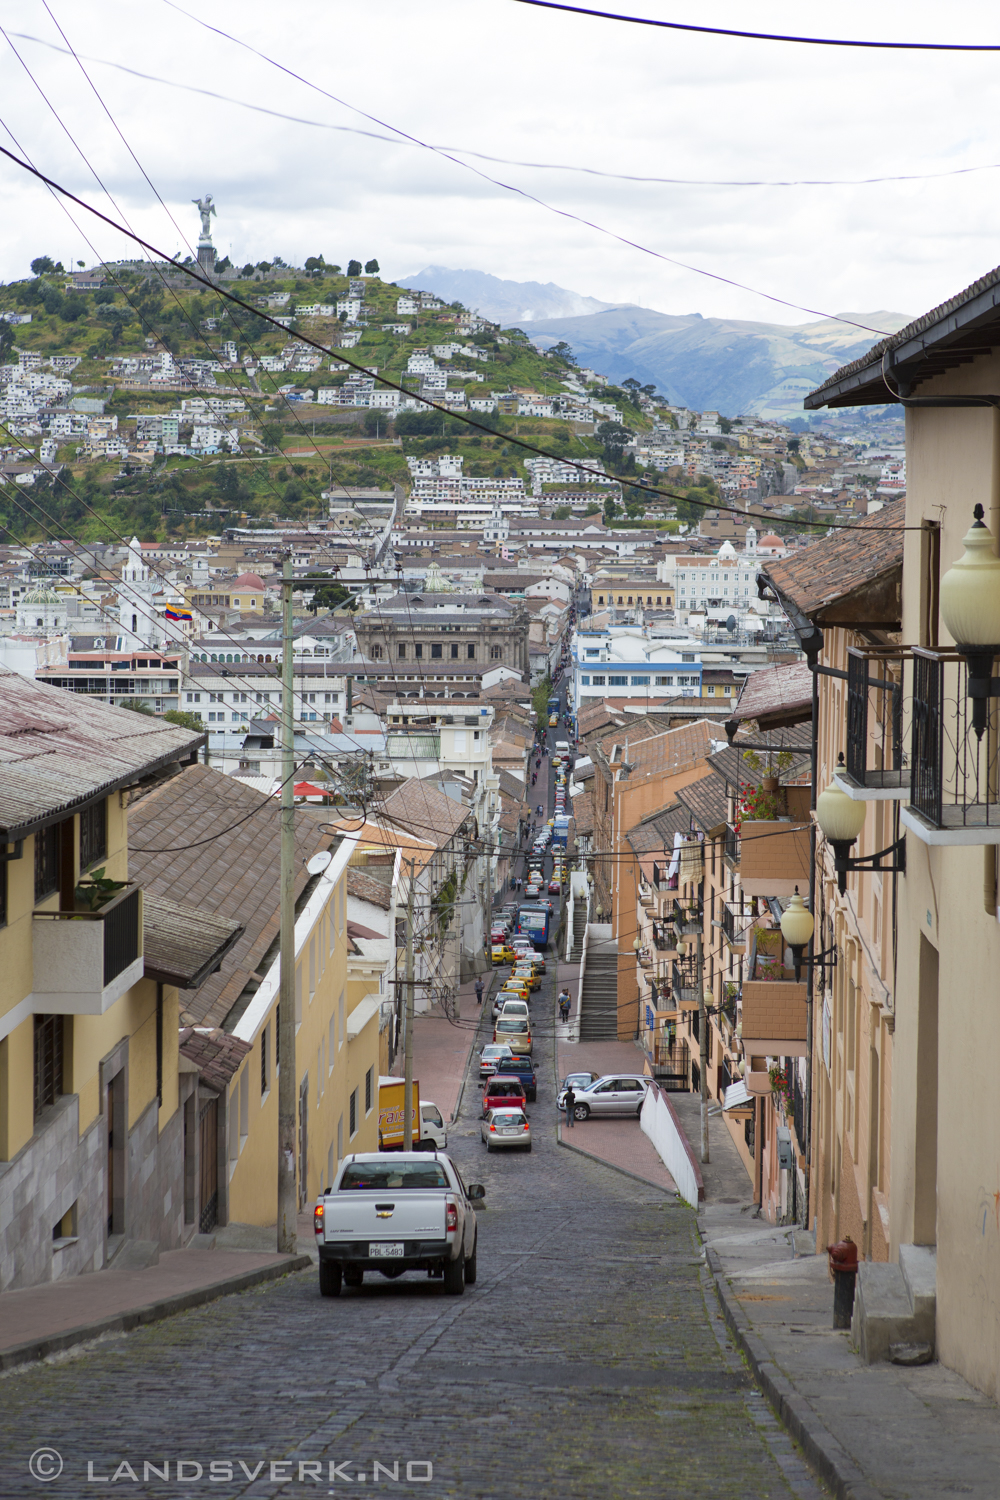 Old Quito, Ecuador. 

(Canon EOS 5D Mark III / Canon EF 24-70mm f/2.8 L USM)